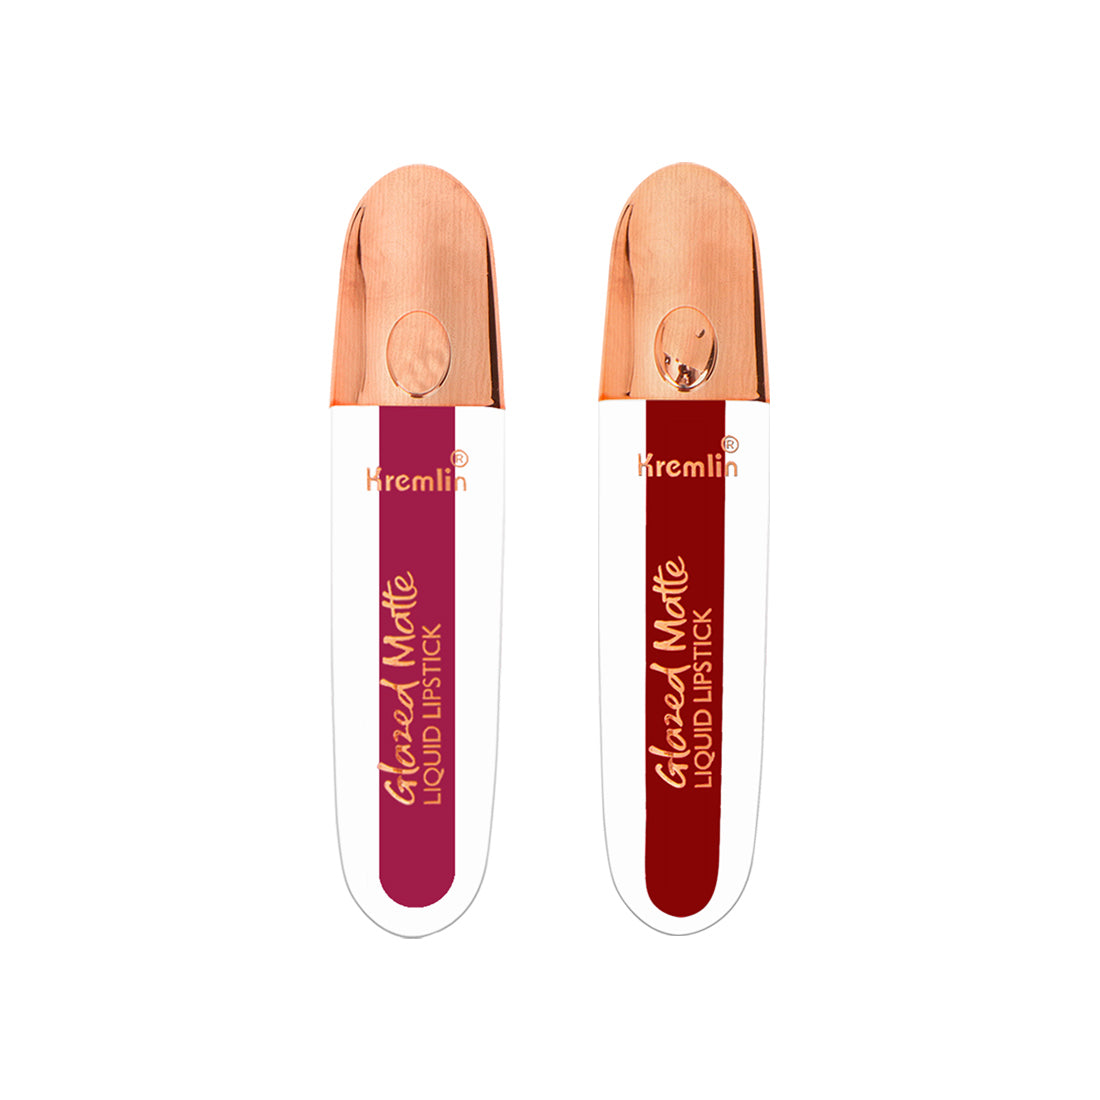 Kremlin Glazed Matte Liquid Lipstick Lips Pack of 2 (Barbie, Fiery Queen)